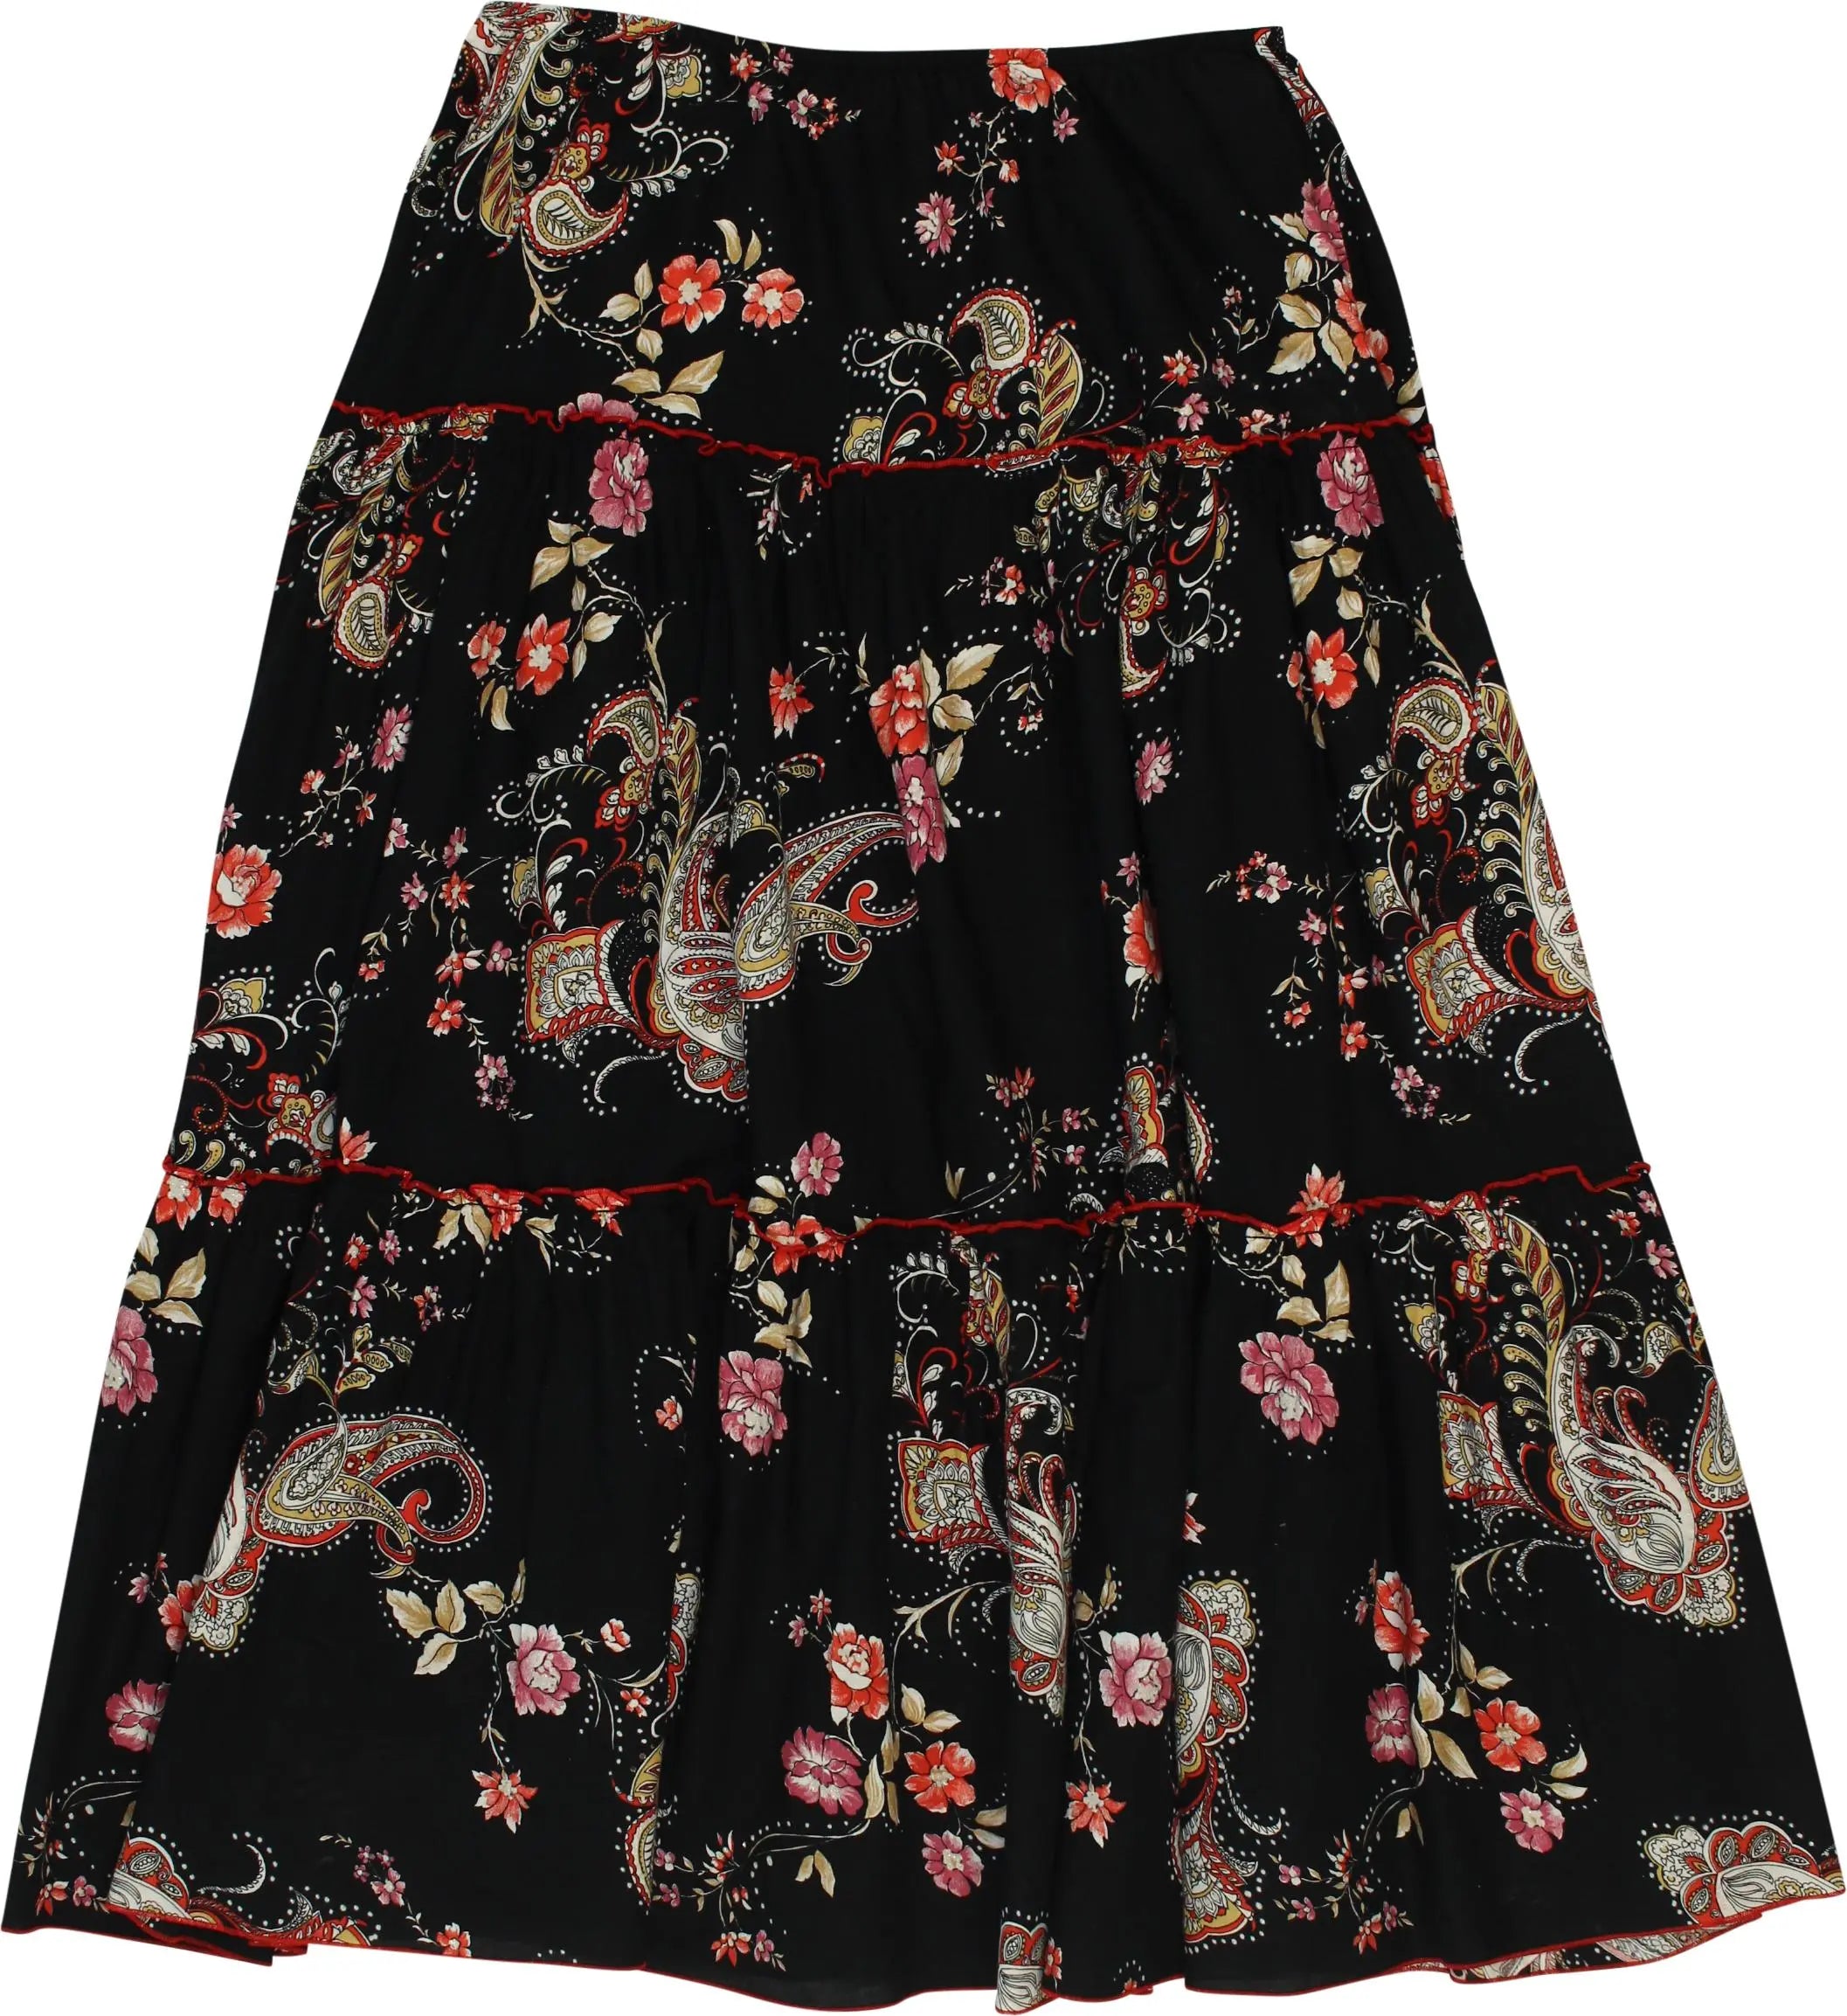 Safran - Floral Skirt- ThriftTale.com - Vintage and second handclothing